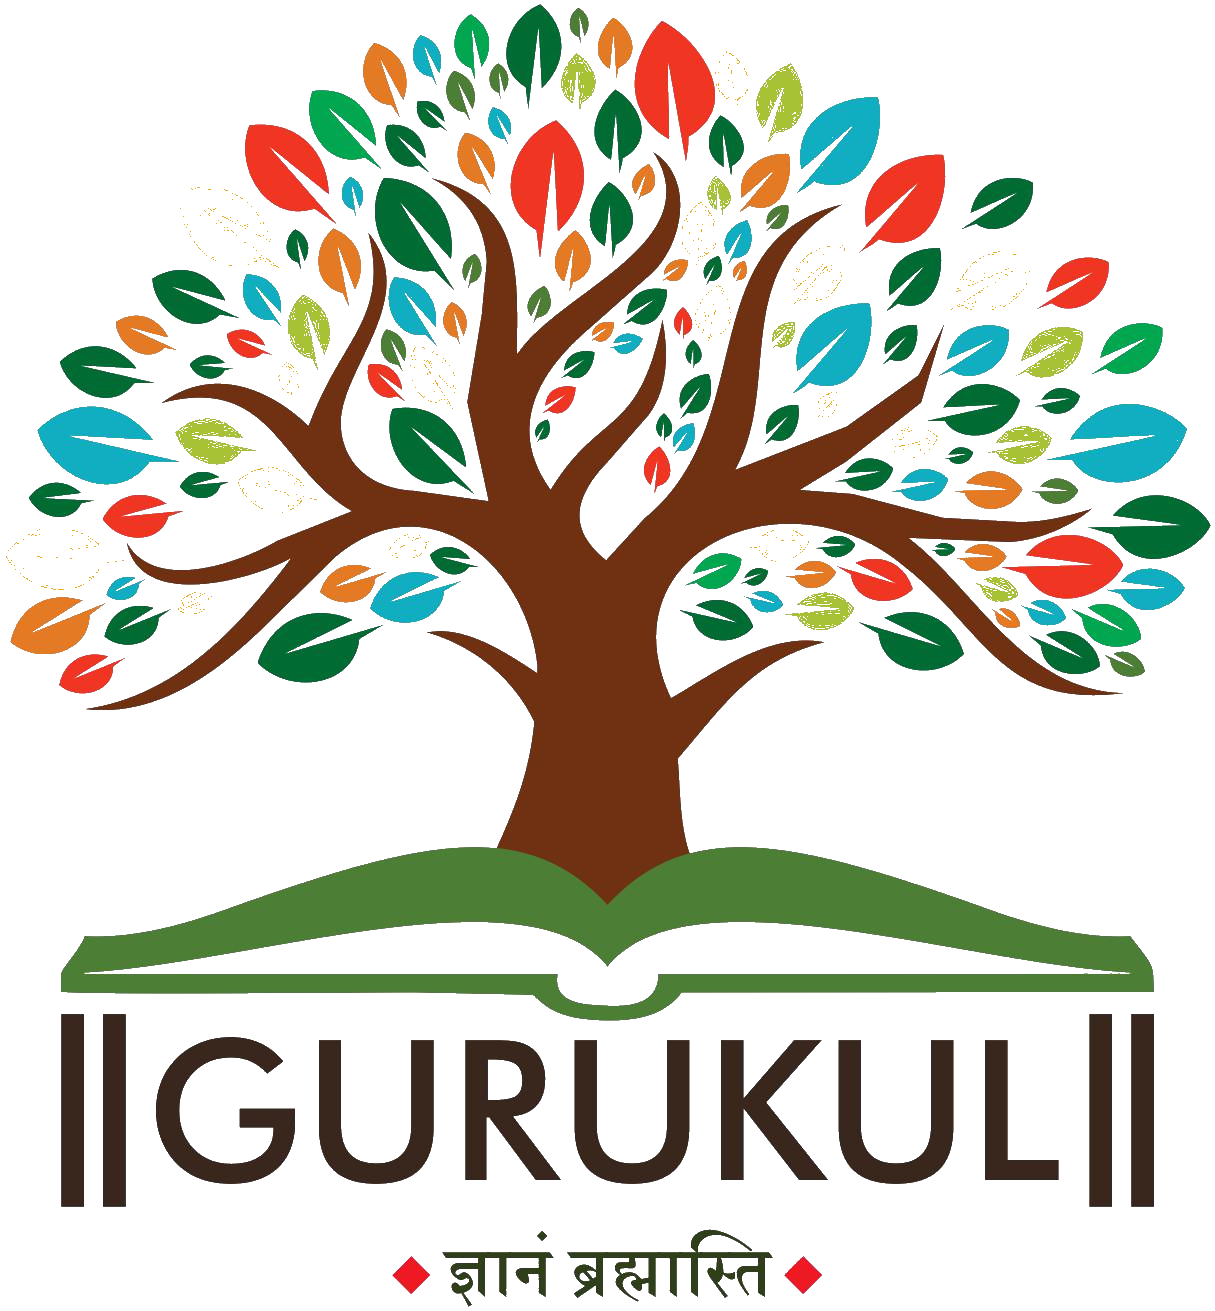 Gurukul School|Colleges|Education